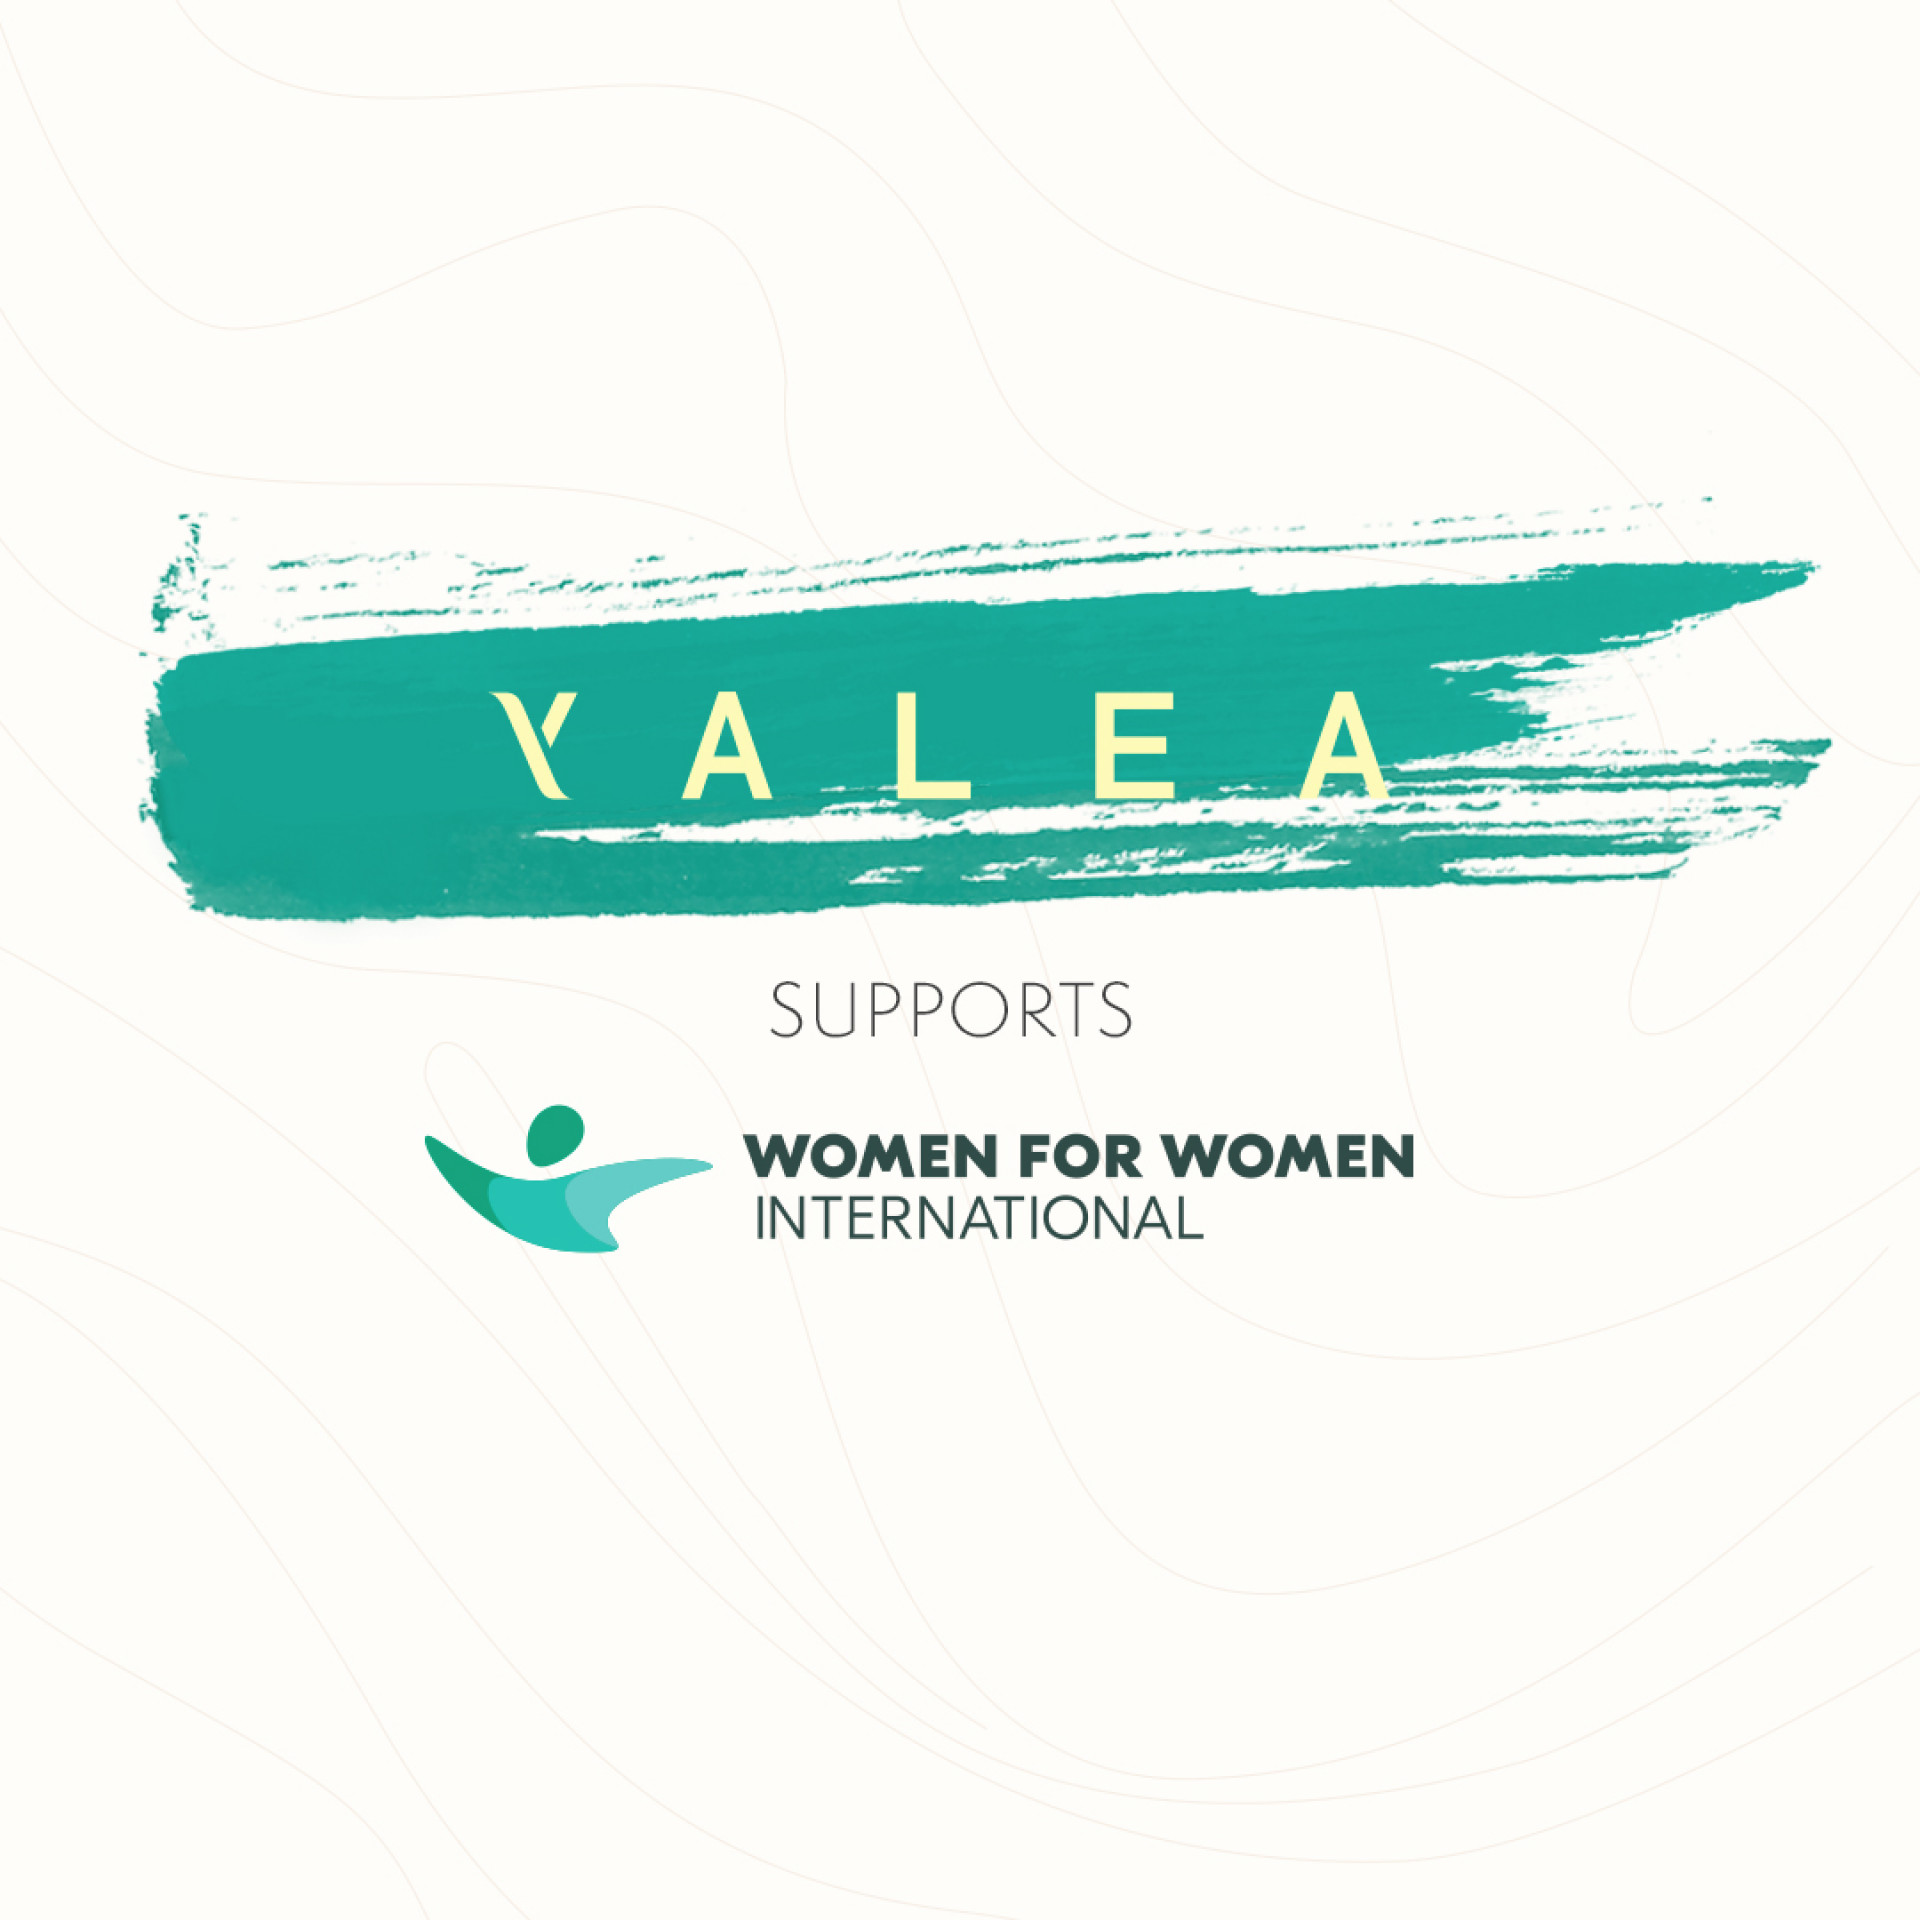 YALEAは、世界中の女性を支援するためにナイジェリアで開催されたWomen for Women Internationalの「より強い女性、より強い国のプログラム」をサポートし、戦争で生き残った女性の生活の再建を献身的に支援しています。